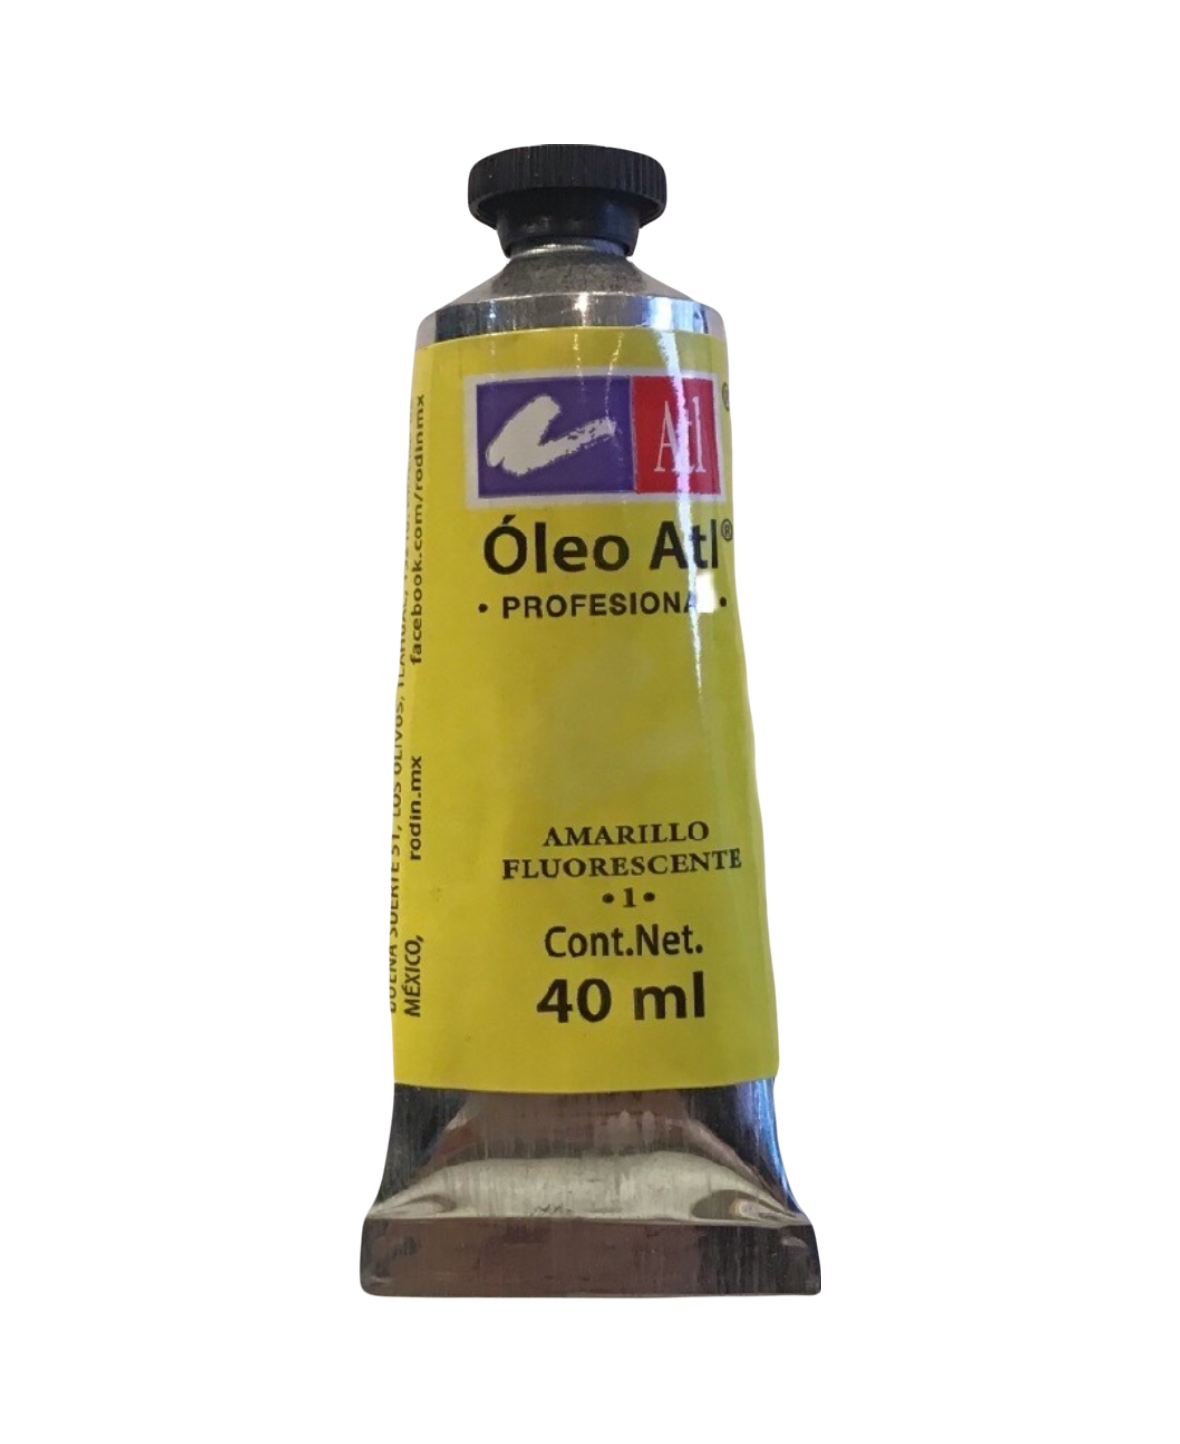 Óleo Atl 40 ml. Amarillo Fluorescente 1